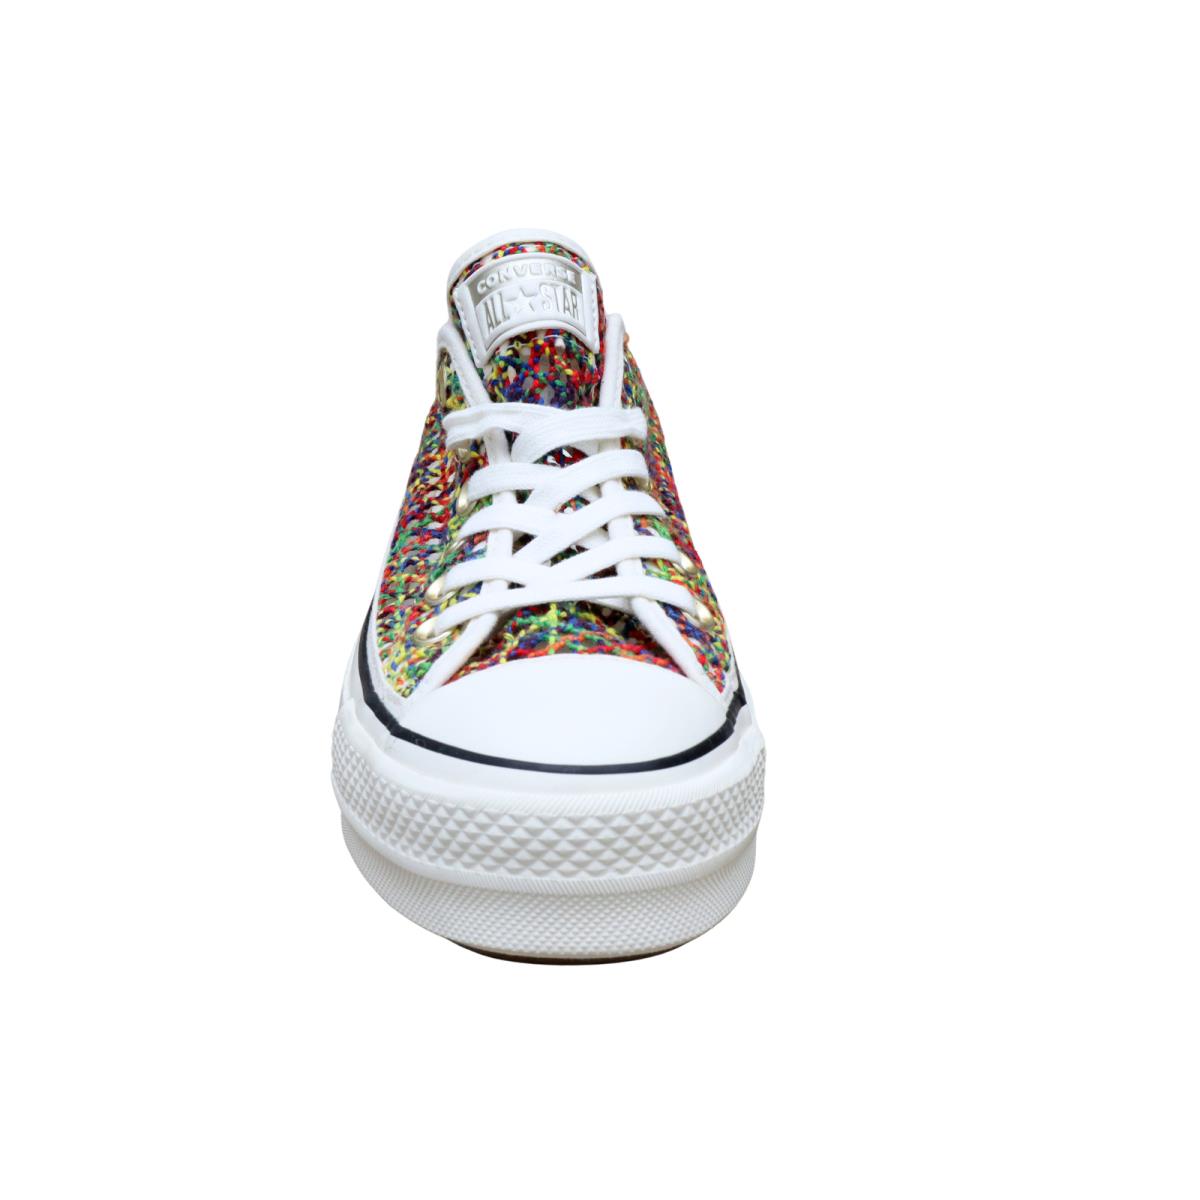 Converse Chuck Taylor All Star Women Multicolor Sneaker Shoes 564874C SZ 8.5